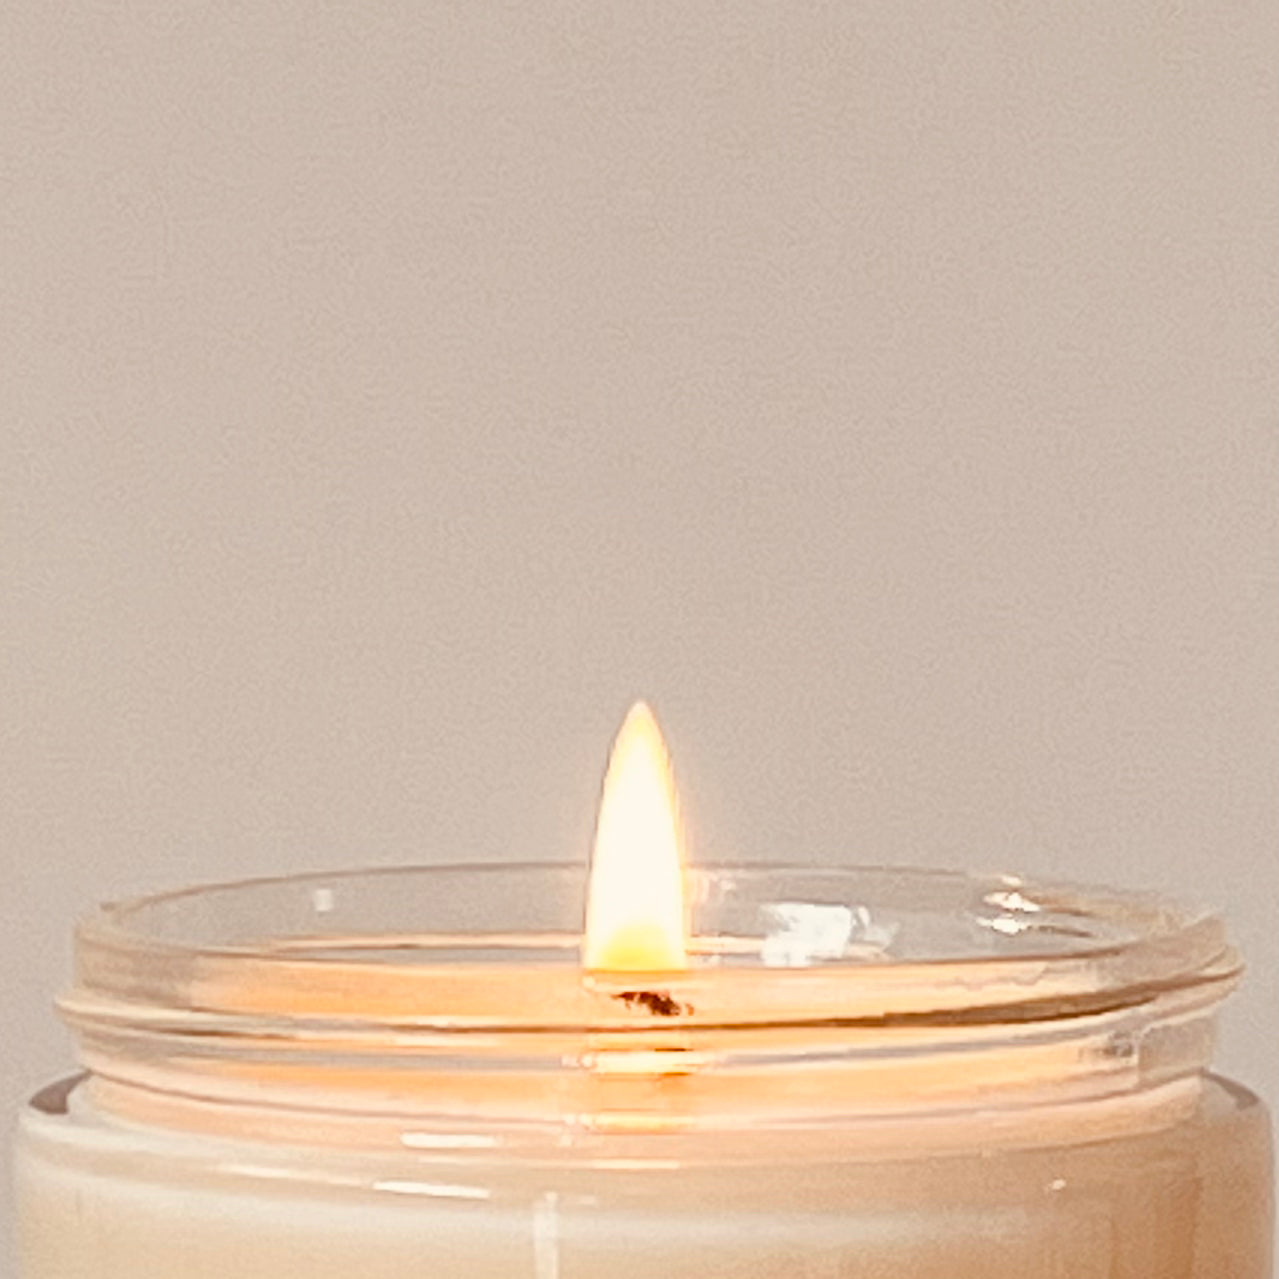 BOOKISH - 8 oz tumbler candle